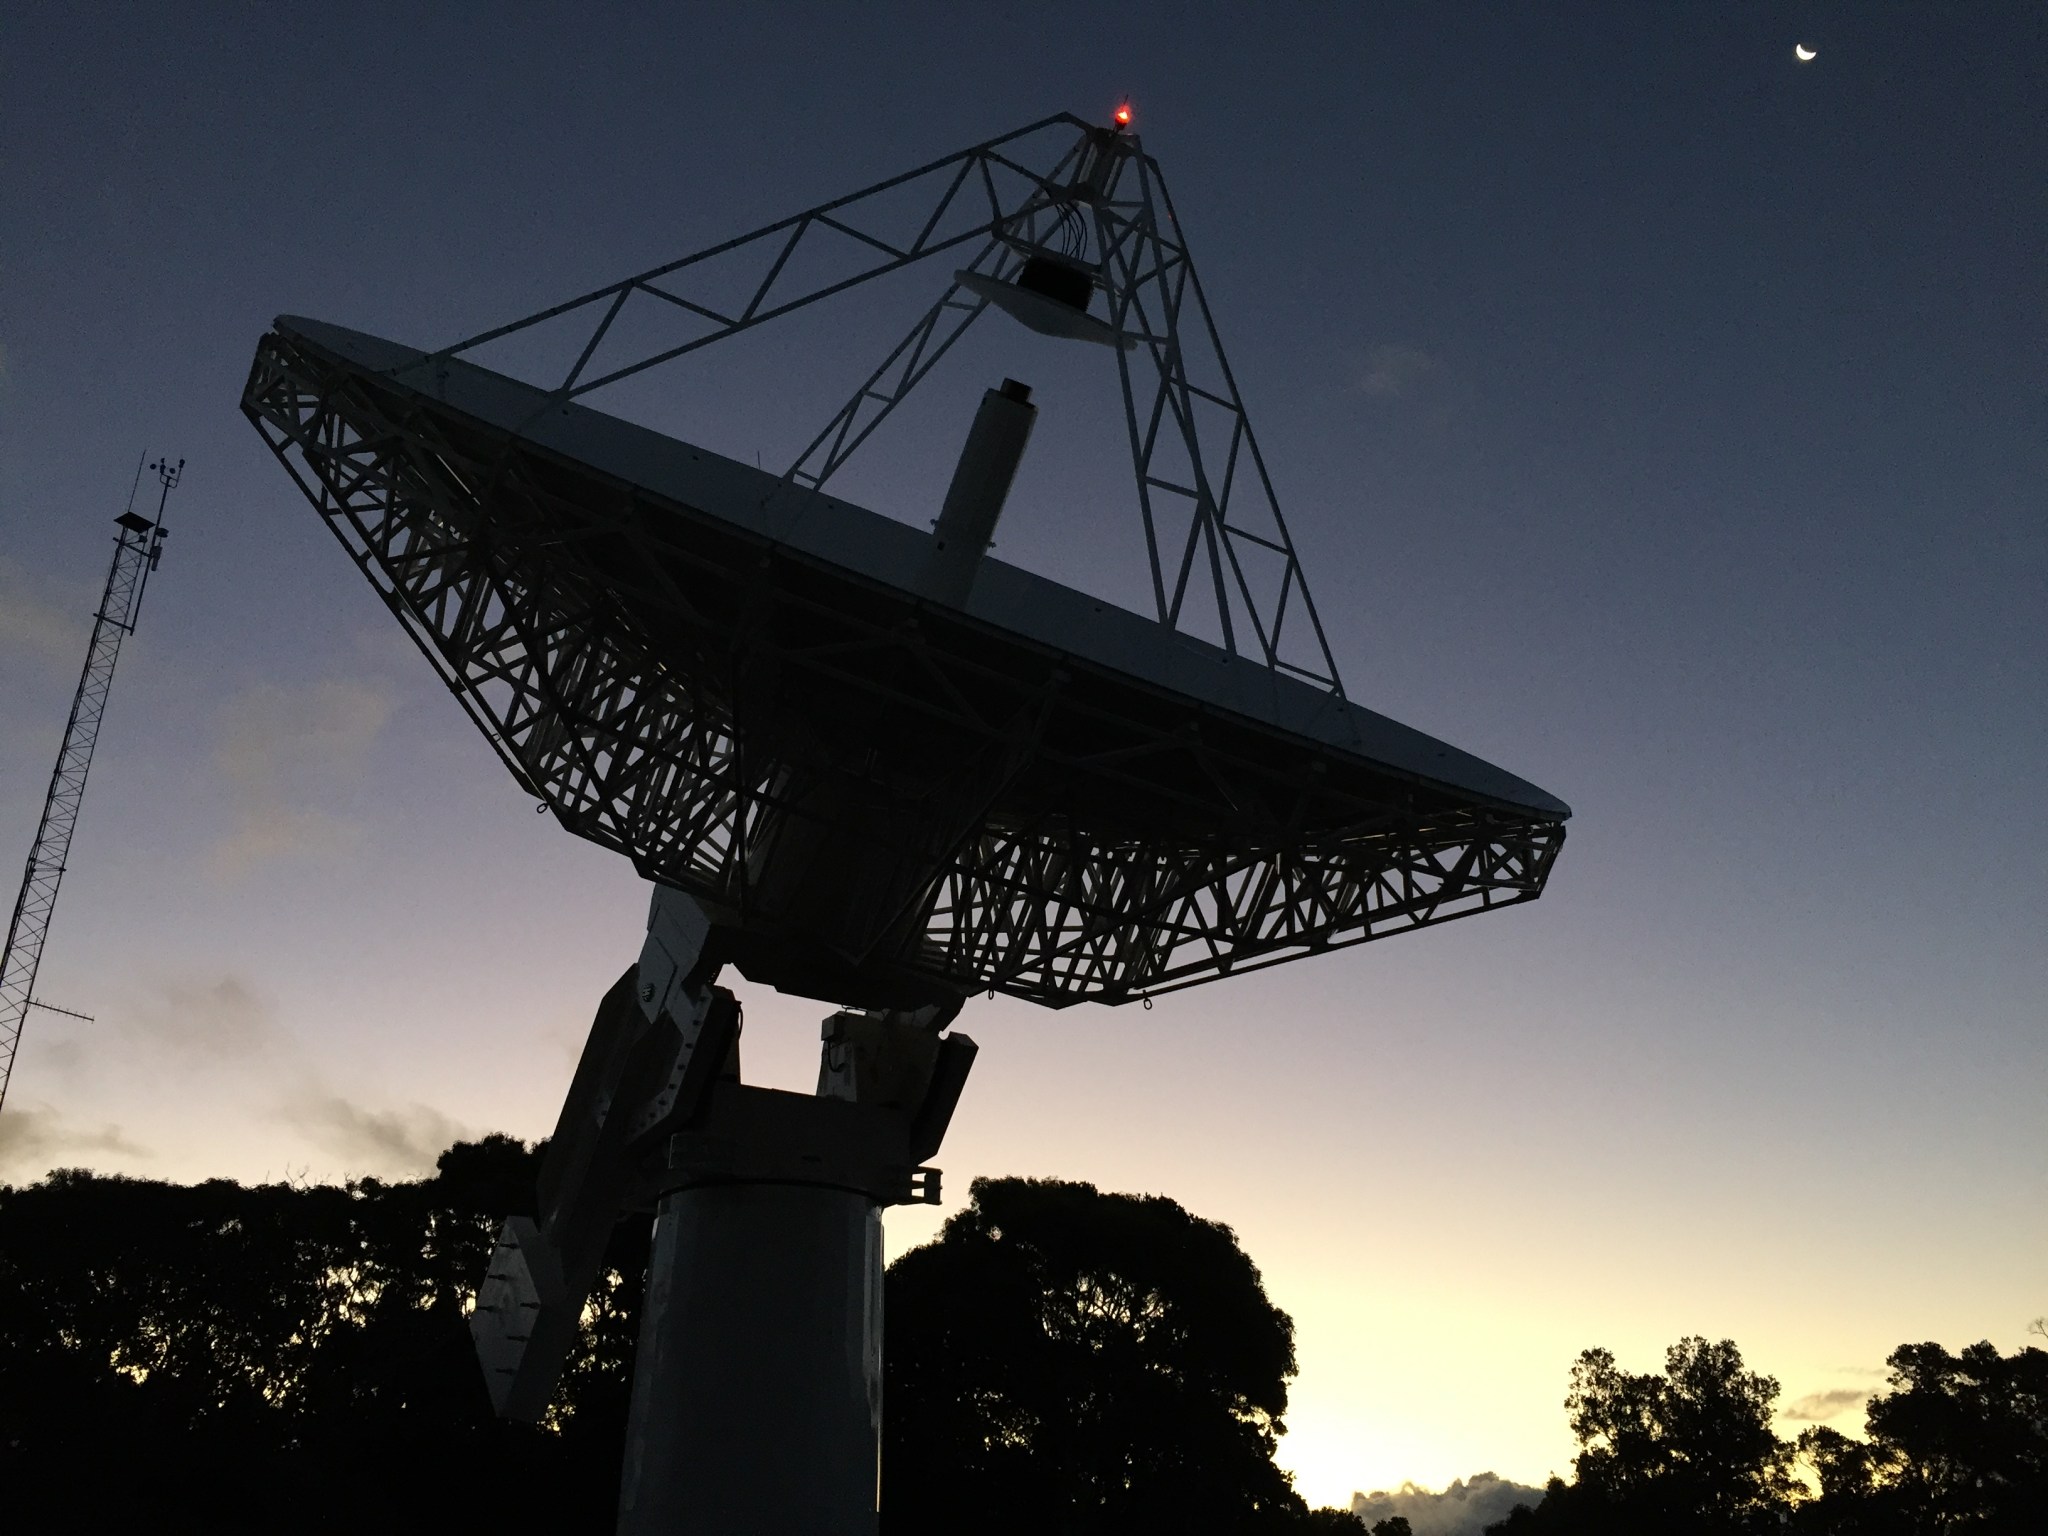 sillhouette of satellite dish at dusk